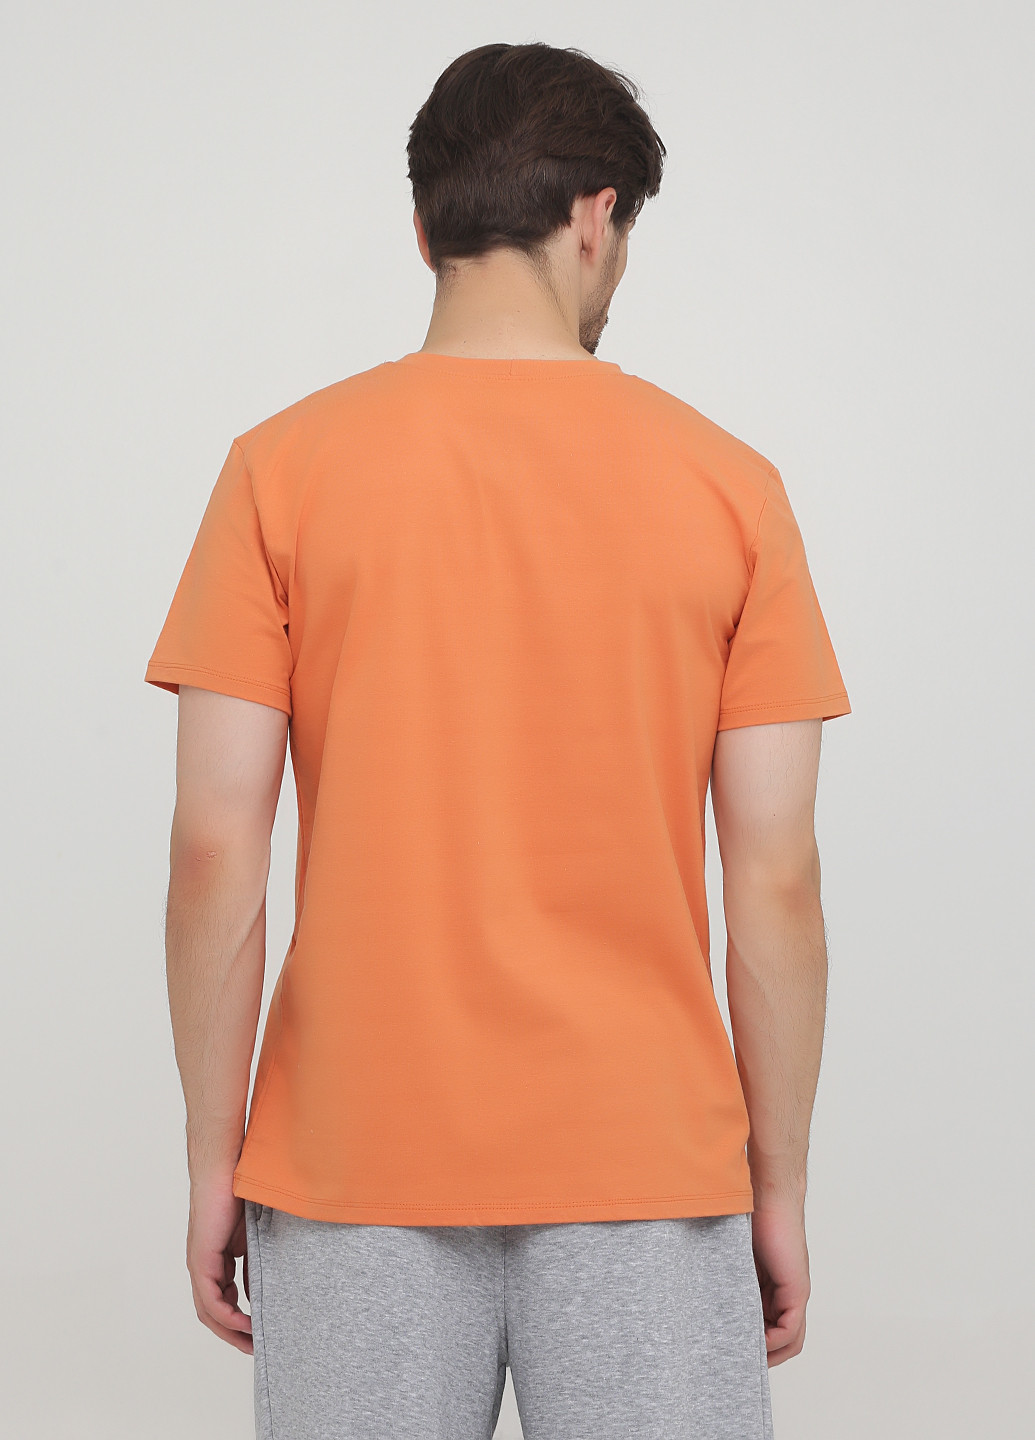 Оранжевая футболка с коротким рукавом Трикомир